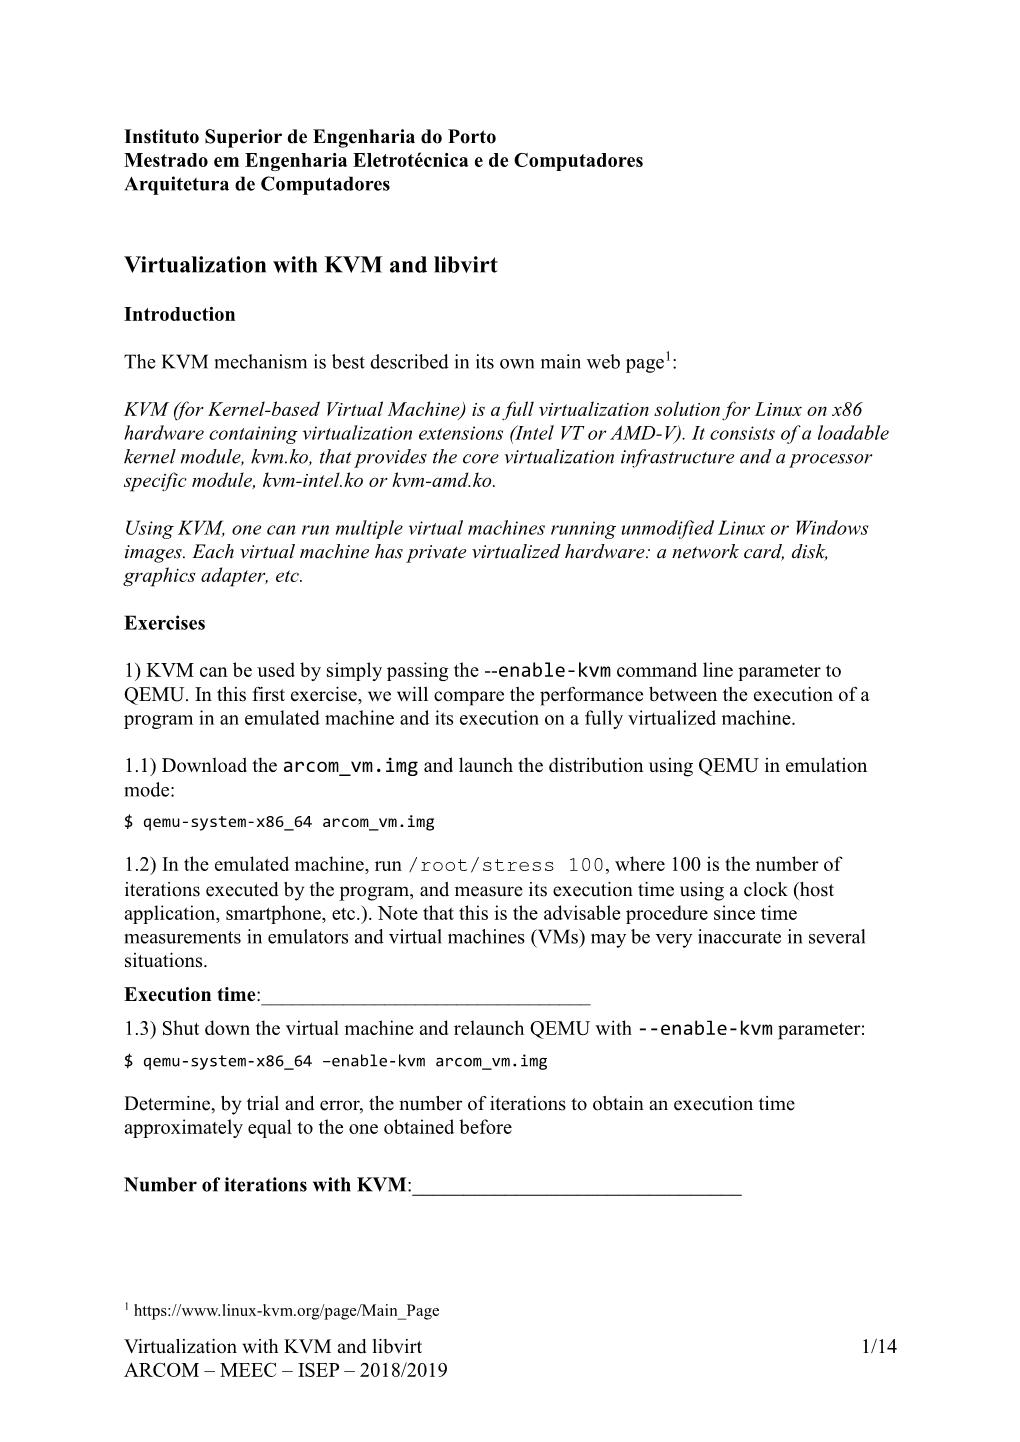 Virtualization with KVM and Libvirt